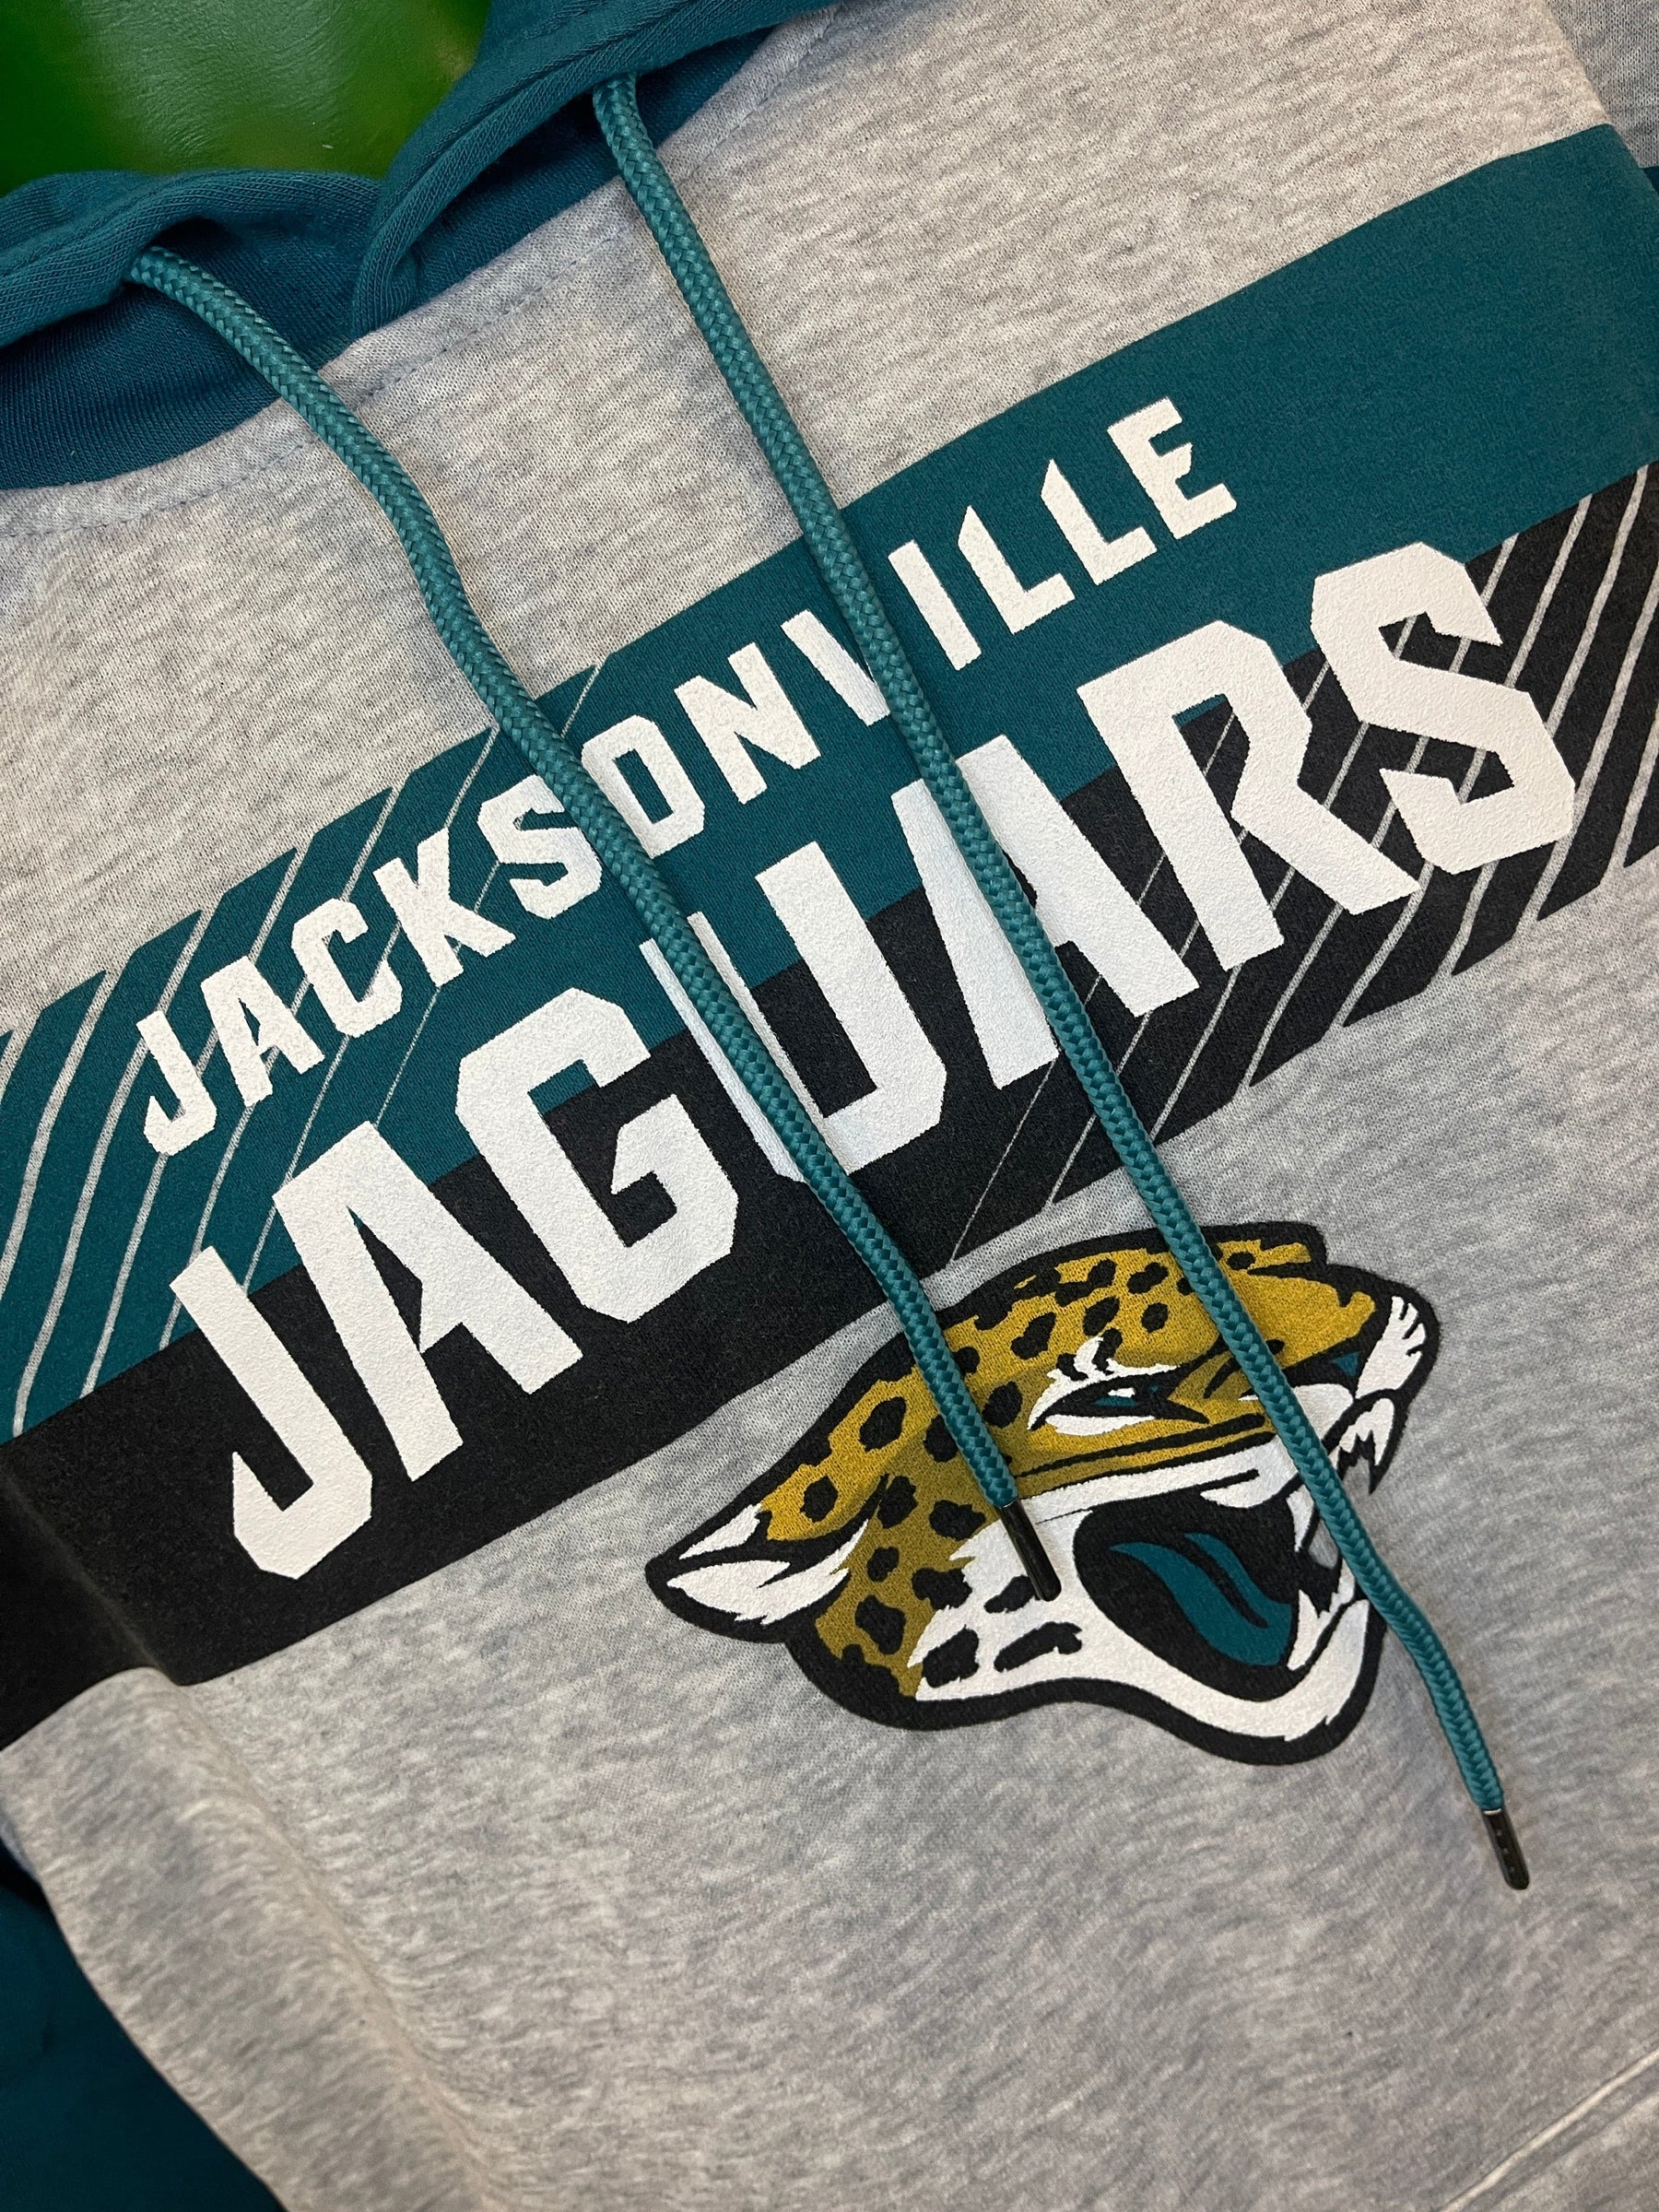 NFL Jacksonville Jaguars Grey Colourblock Hoodie Men's X-Large NWT